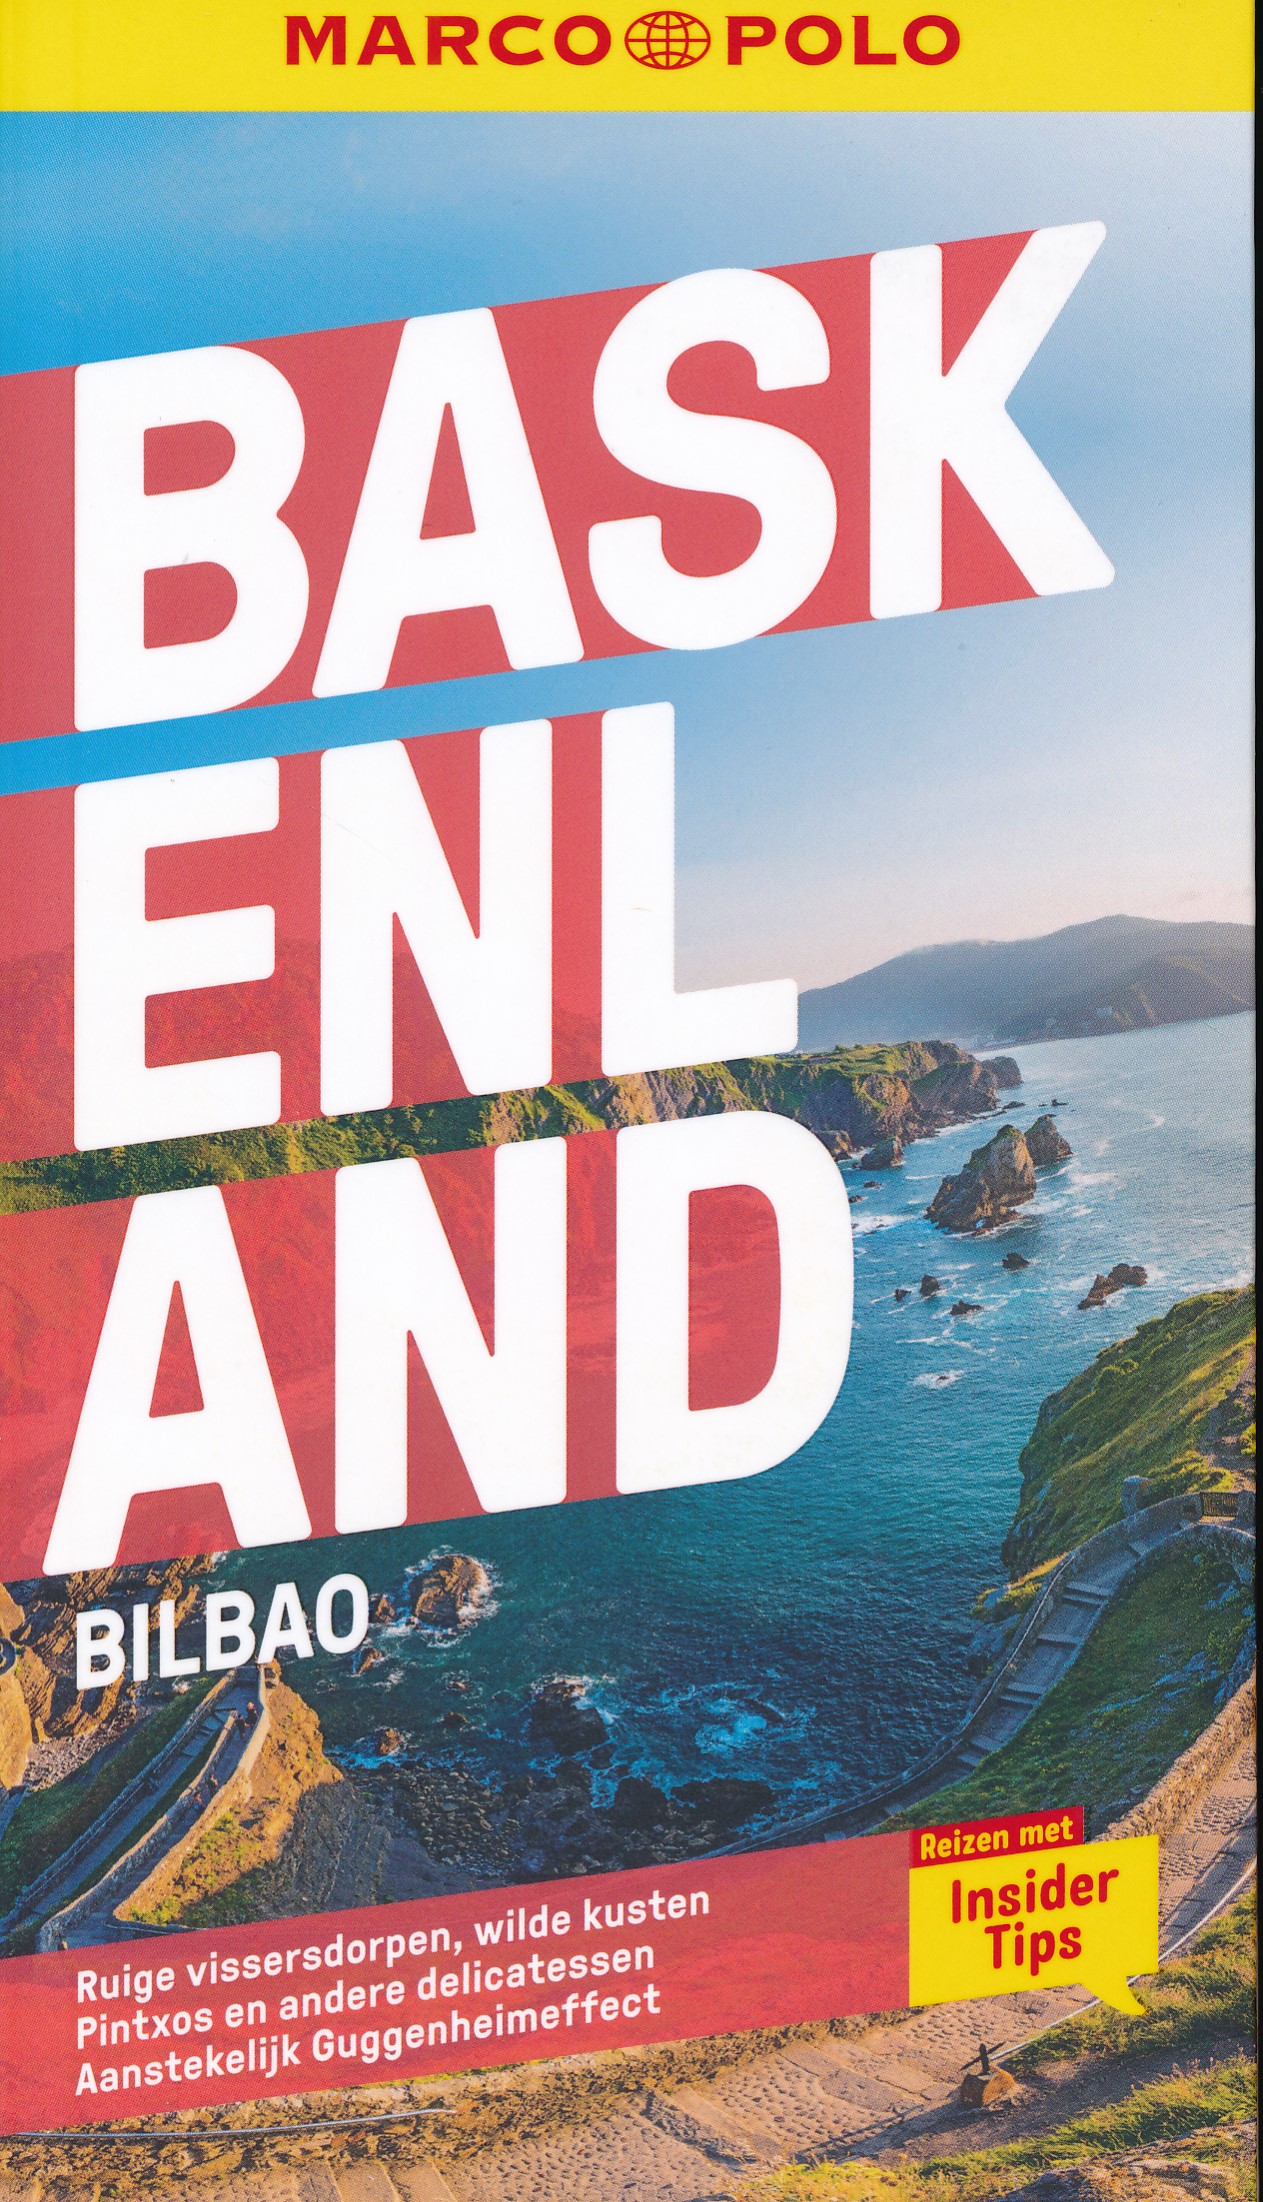 Online bestellen: Reisgids Marco Polo NL Baskenland en Bilbao | 62Damrak